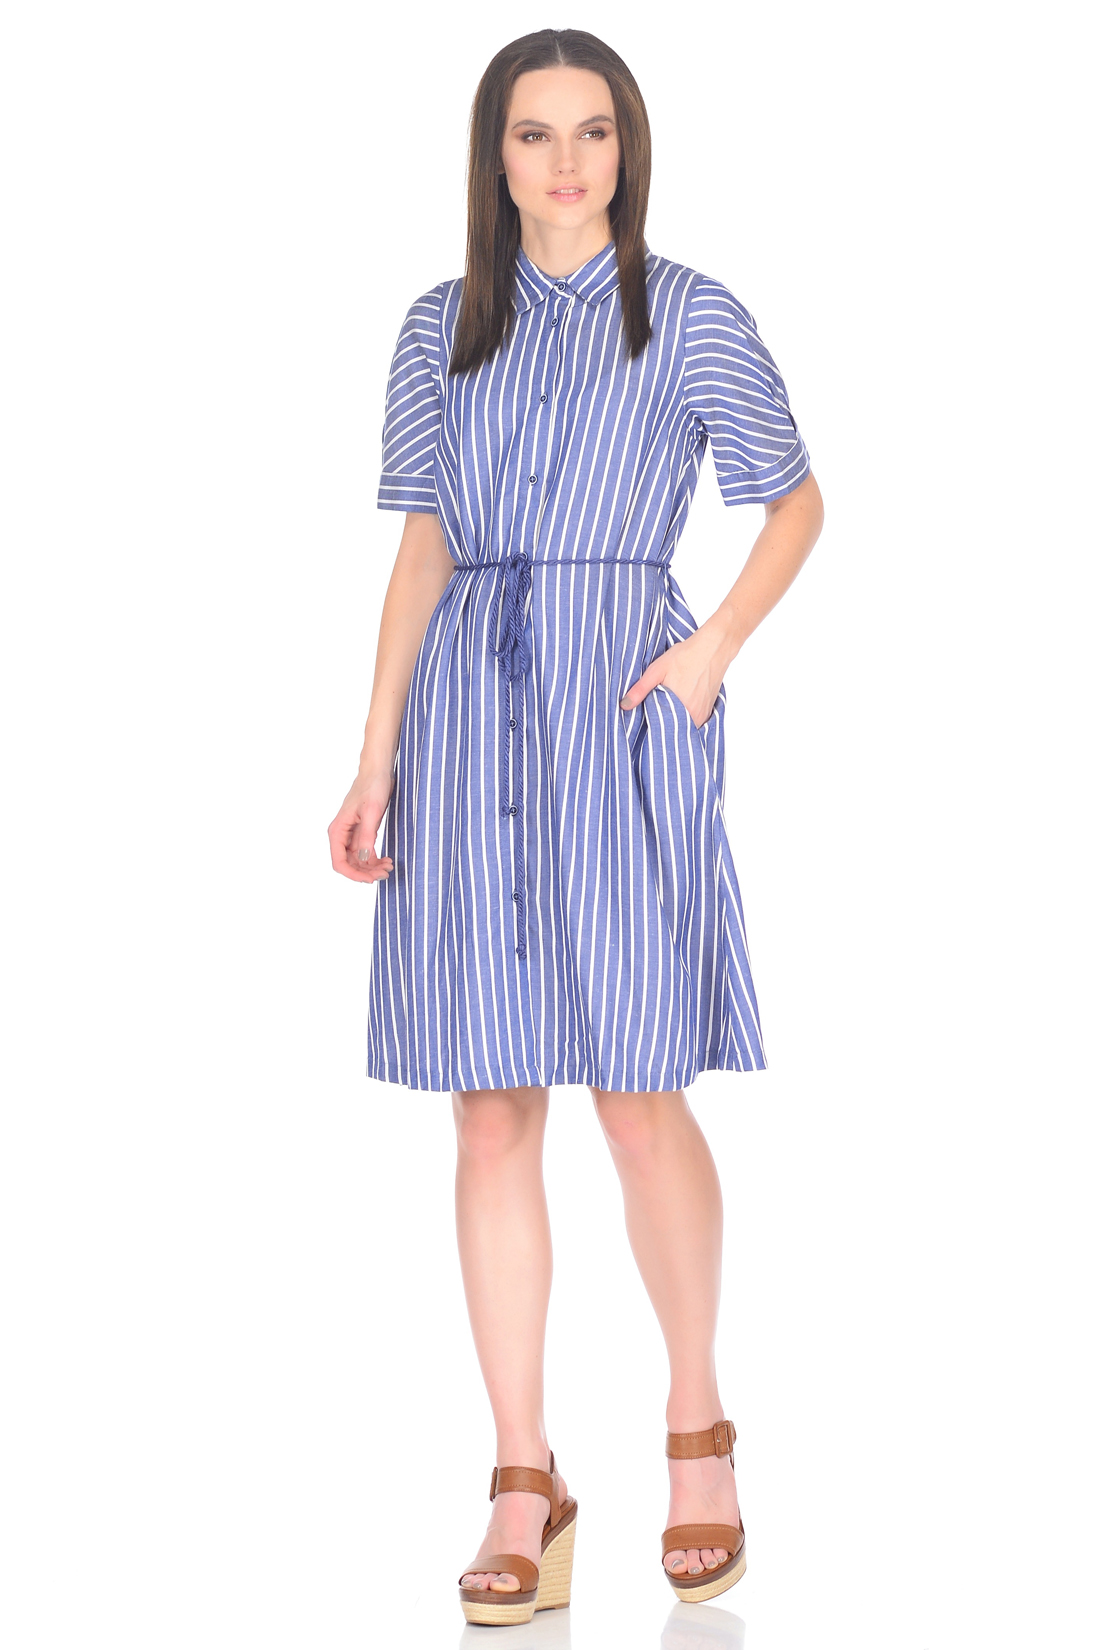 Платье-рубашка со льном (арт. baon B458029), размер S, цвет dark navy striped#синий Платье-рубашка со льном (арт. baon B458029) - фото 1